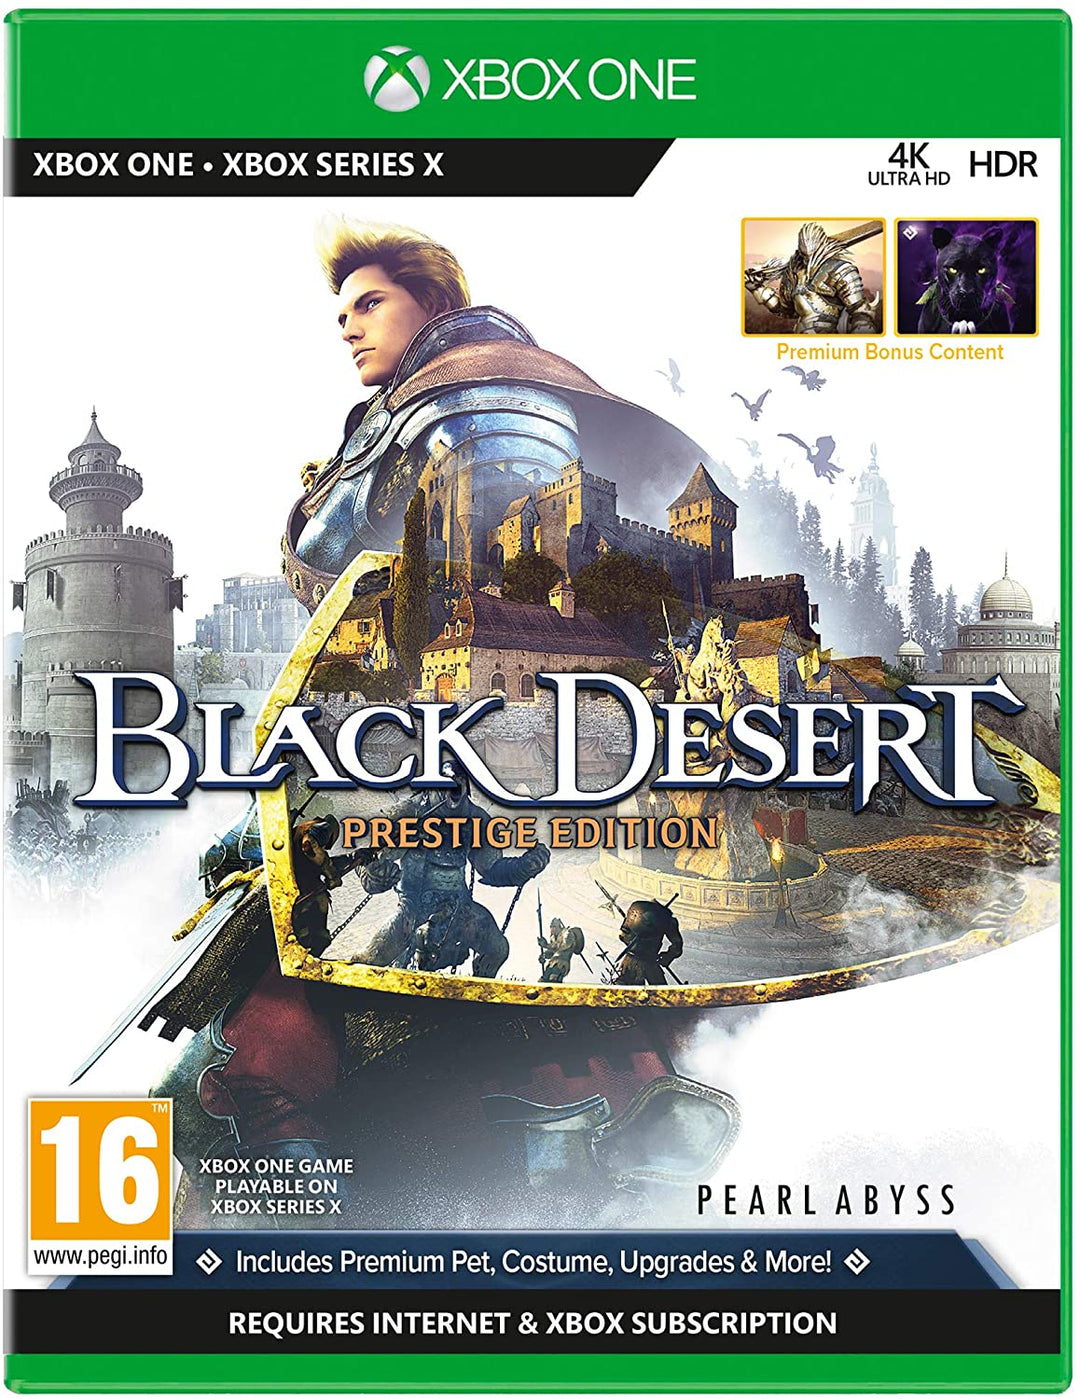 Black Desert Prestige Edition (Physical Disc) (Xbox One)